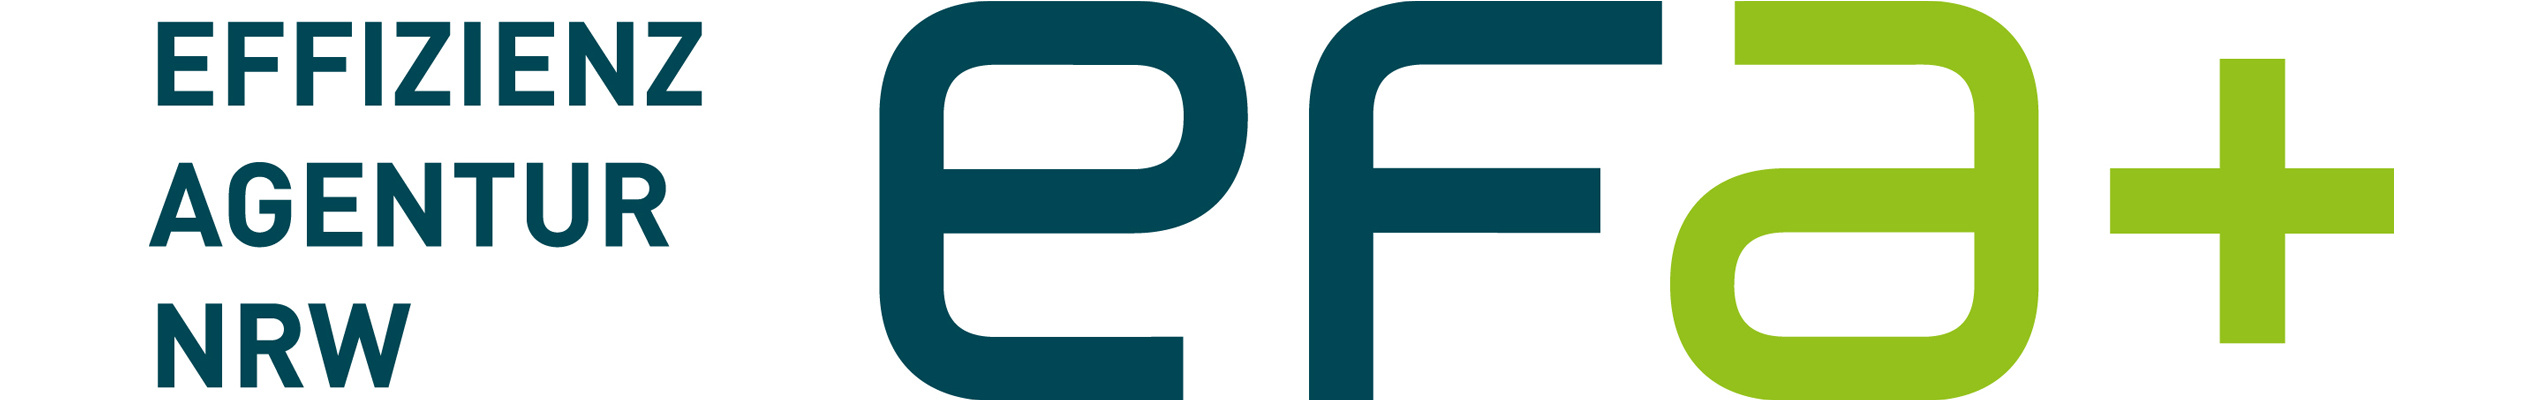 EFA_Logo_4c_sRGB-1_Kopie.jpg